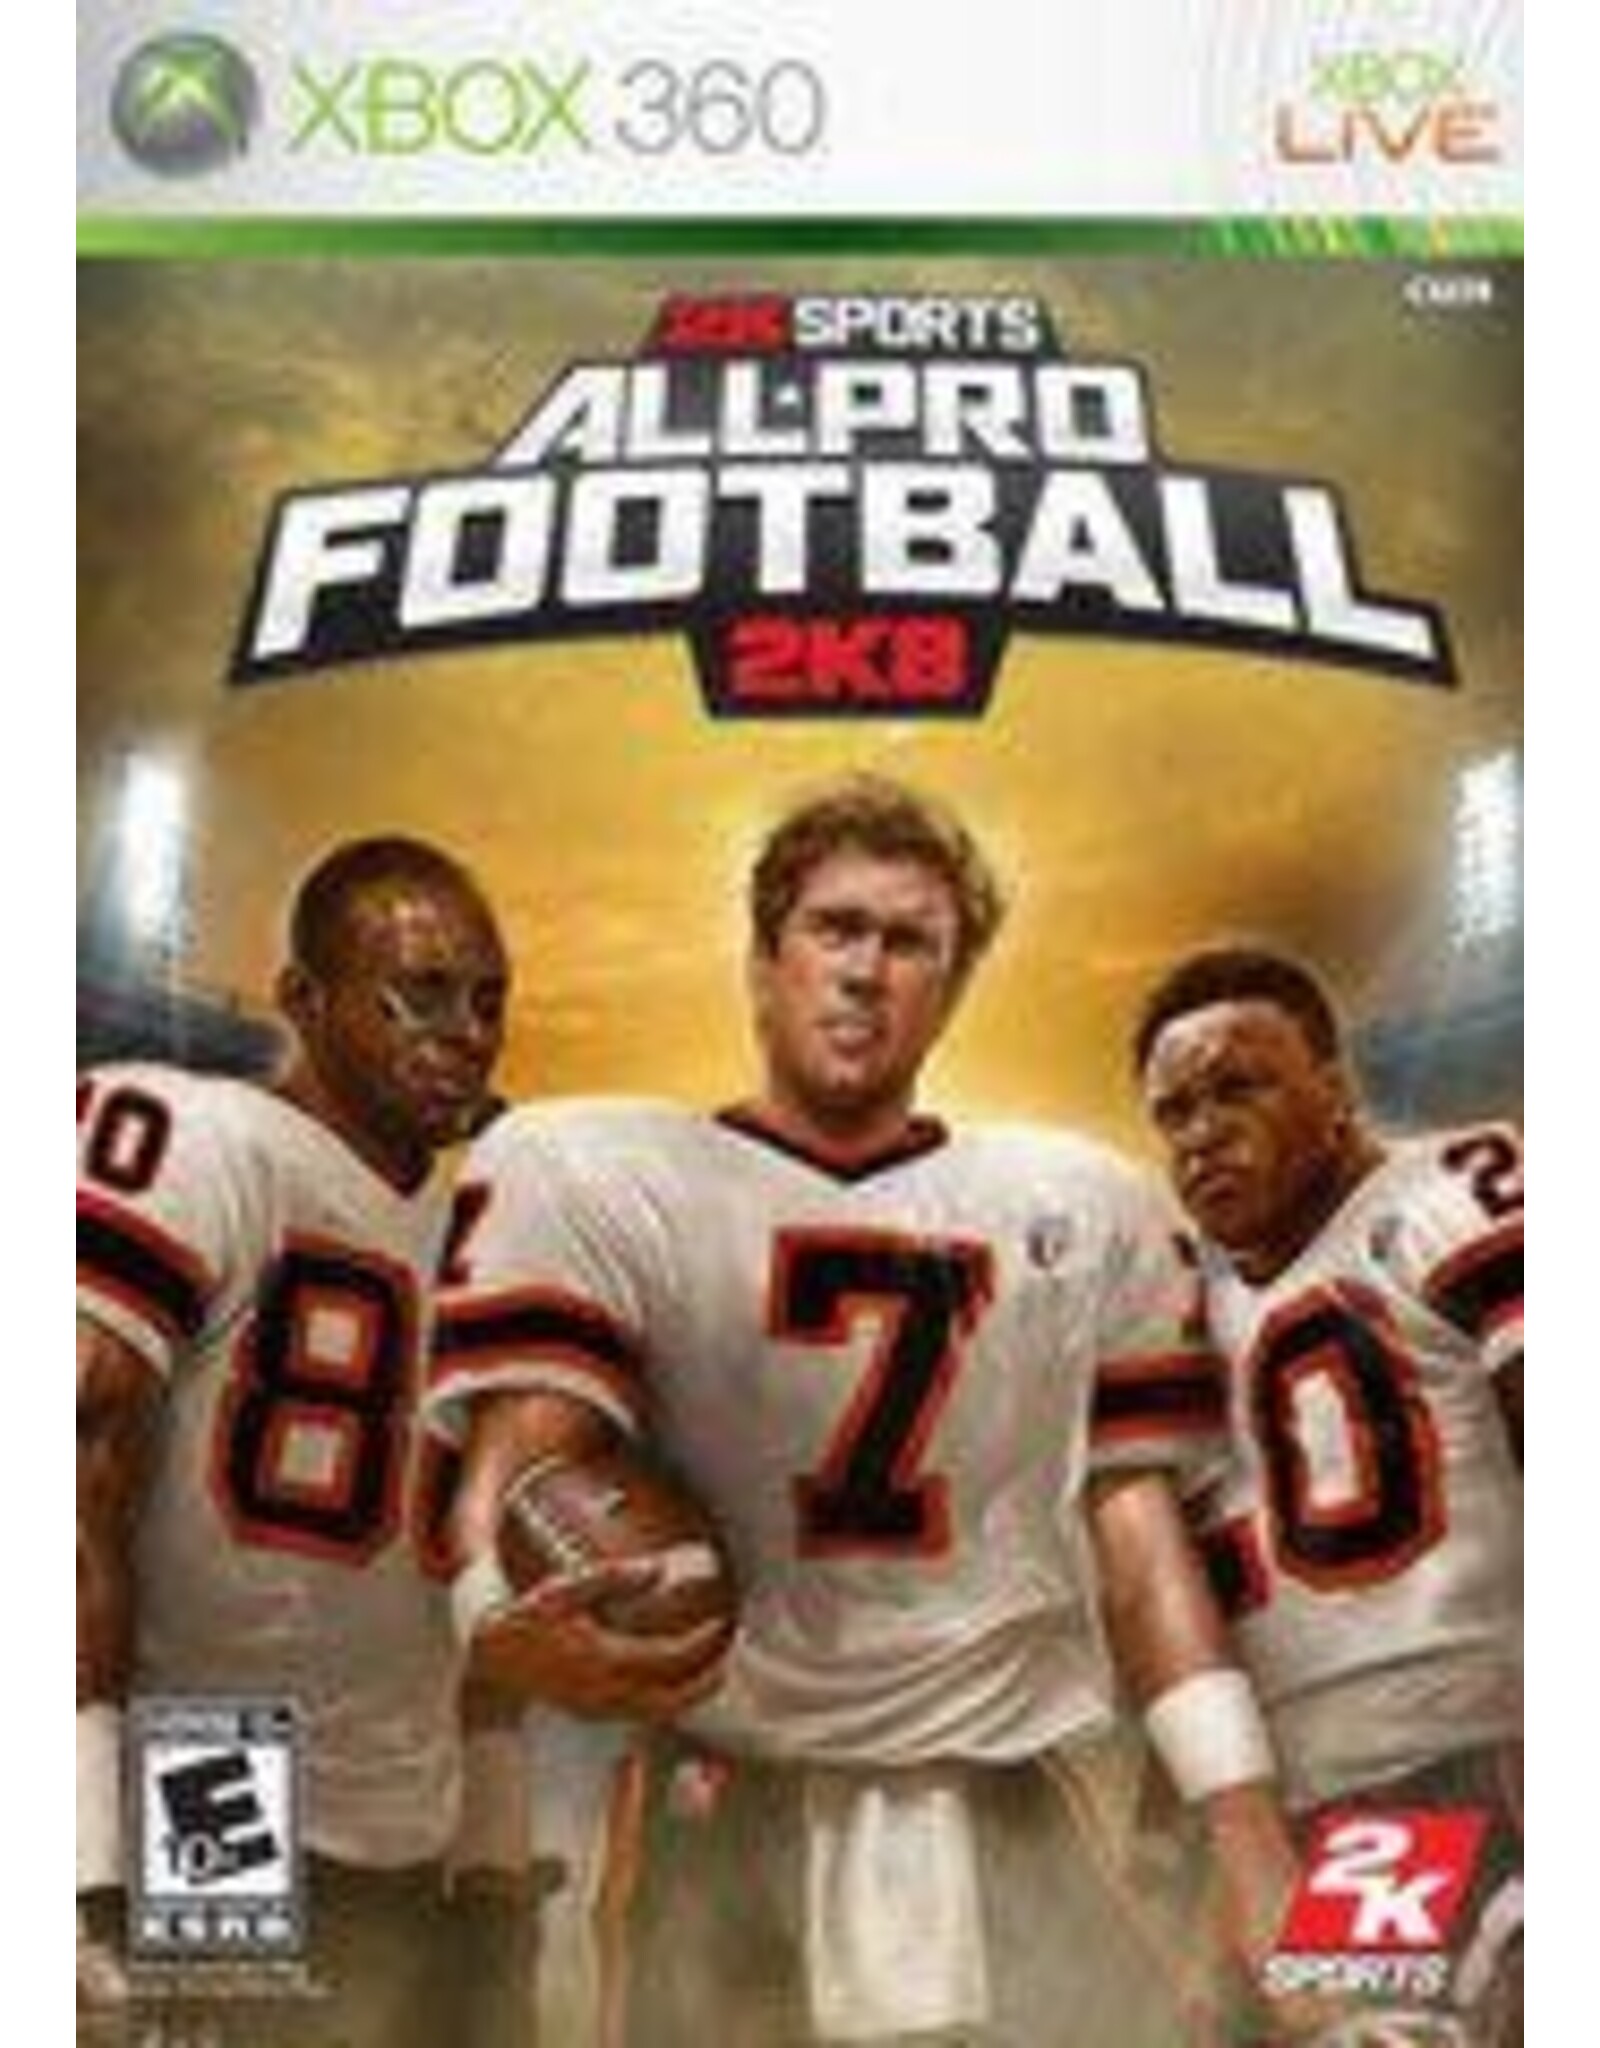 Xbox 360 All Pro Football 2K8 (Brand New)